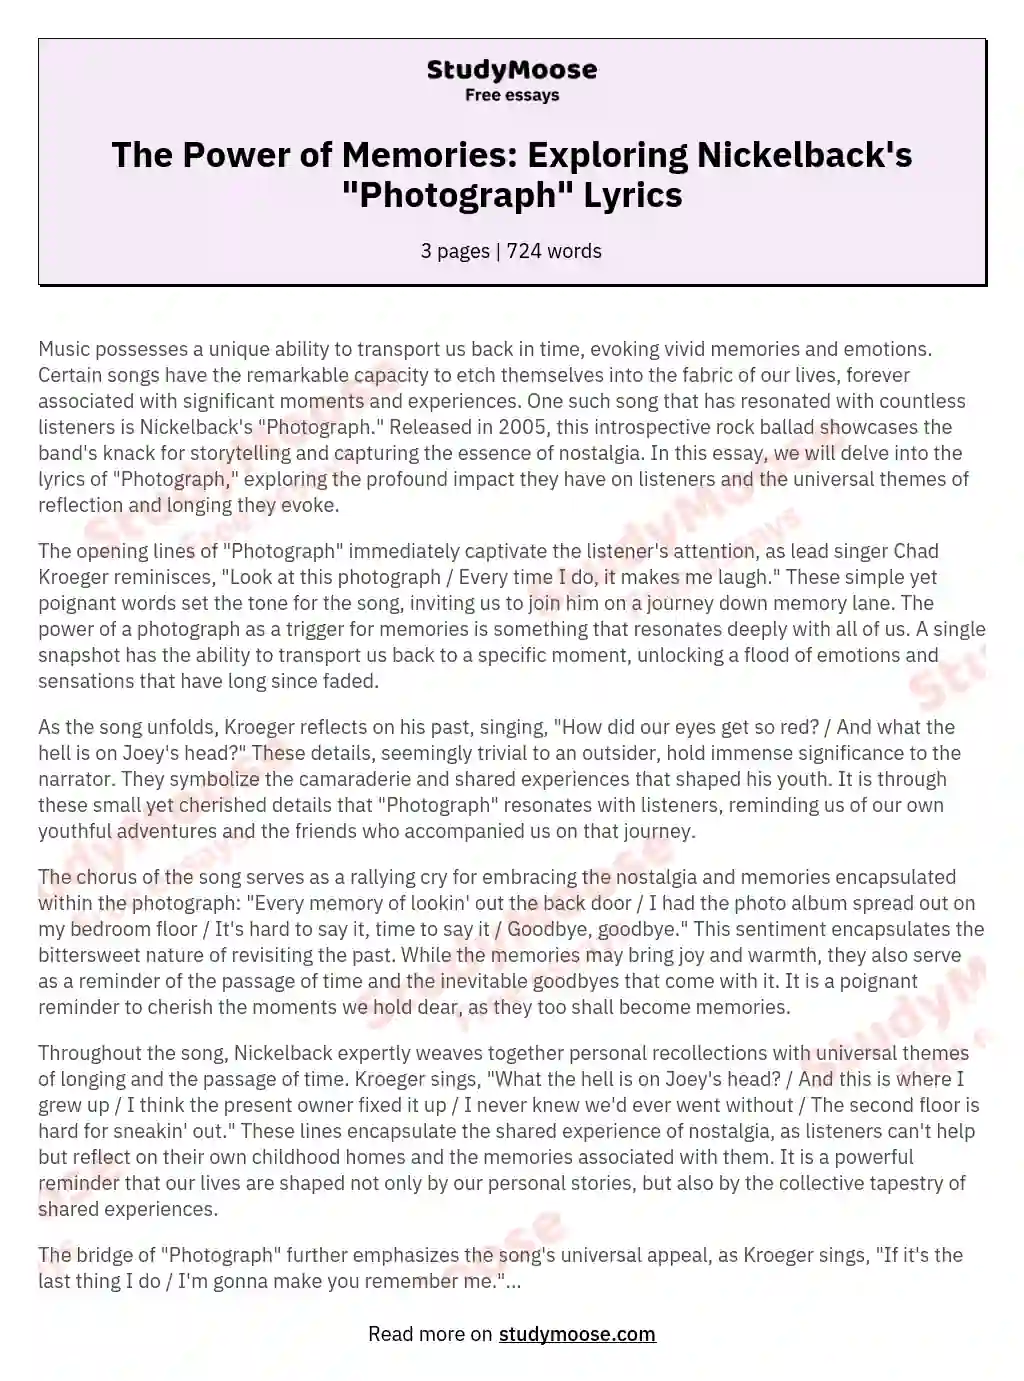 The Power of Memories: Exploring Nickelback's "Photograph" Lyrics essay